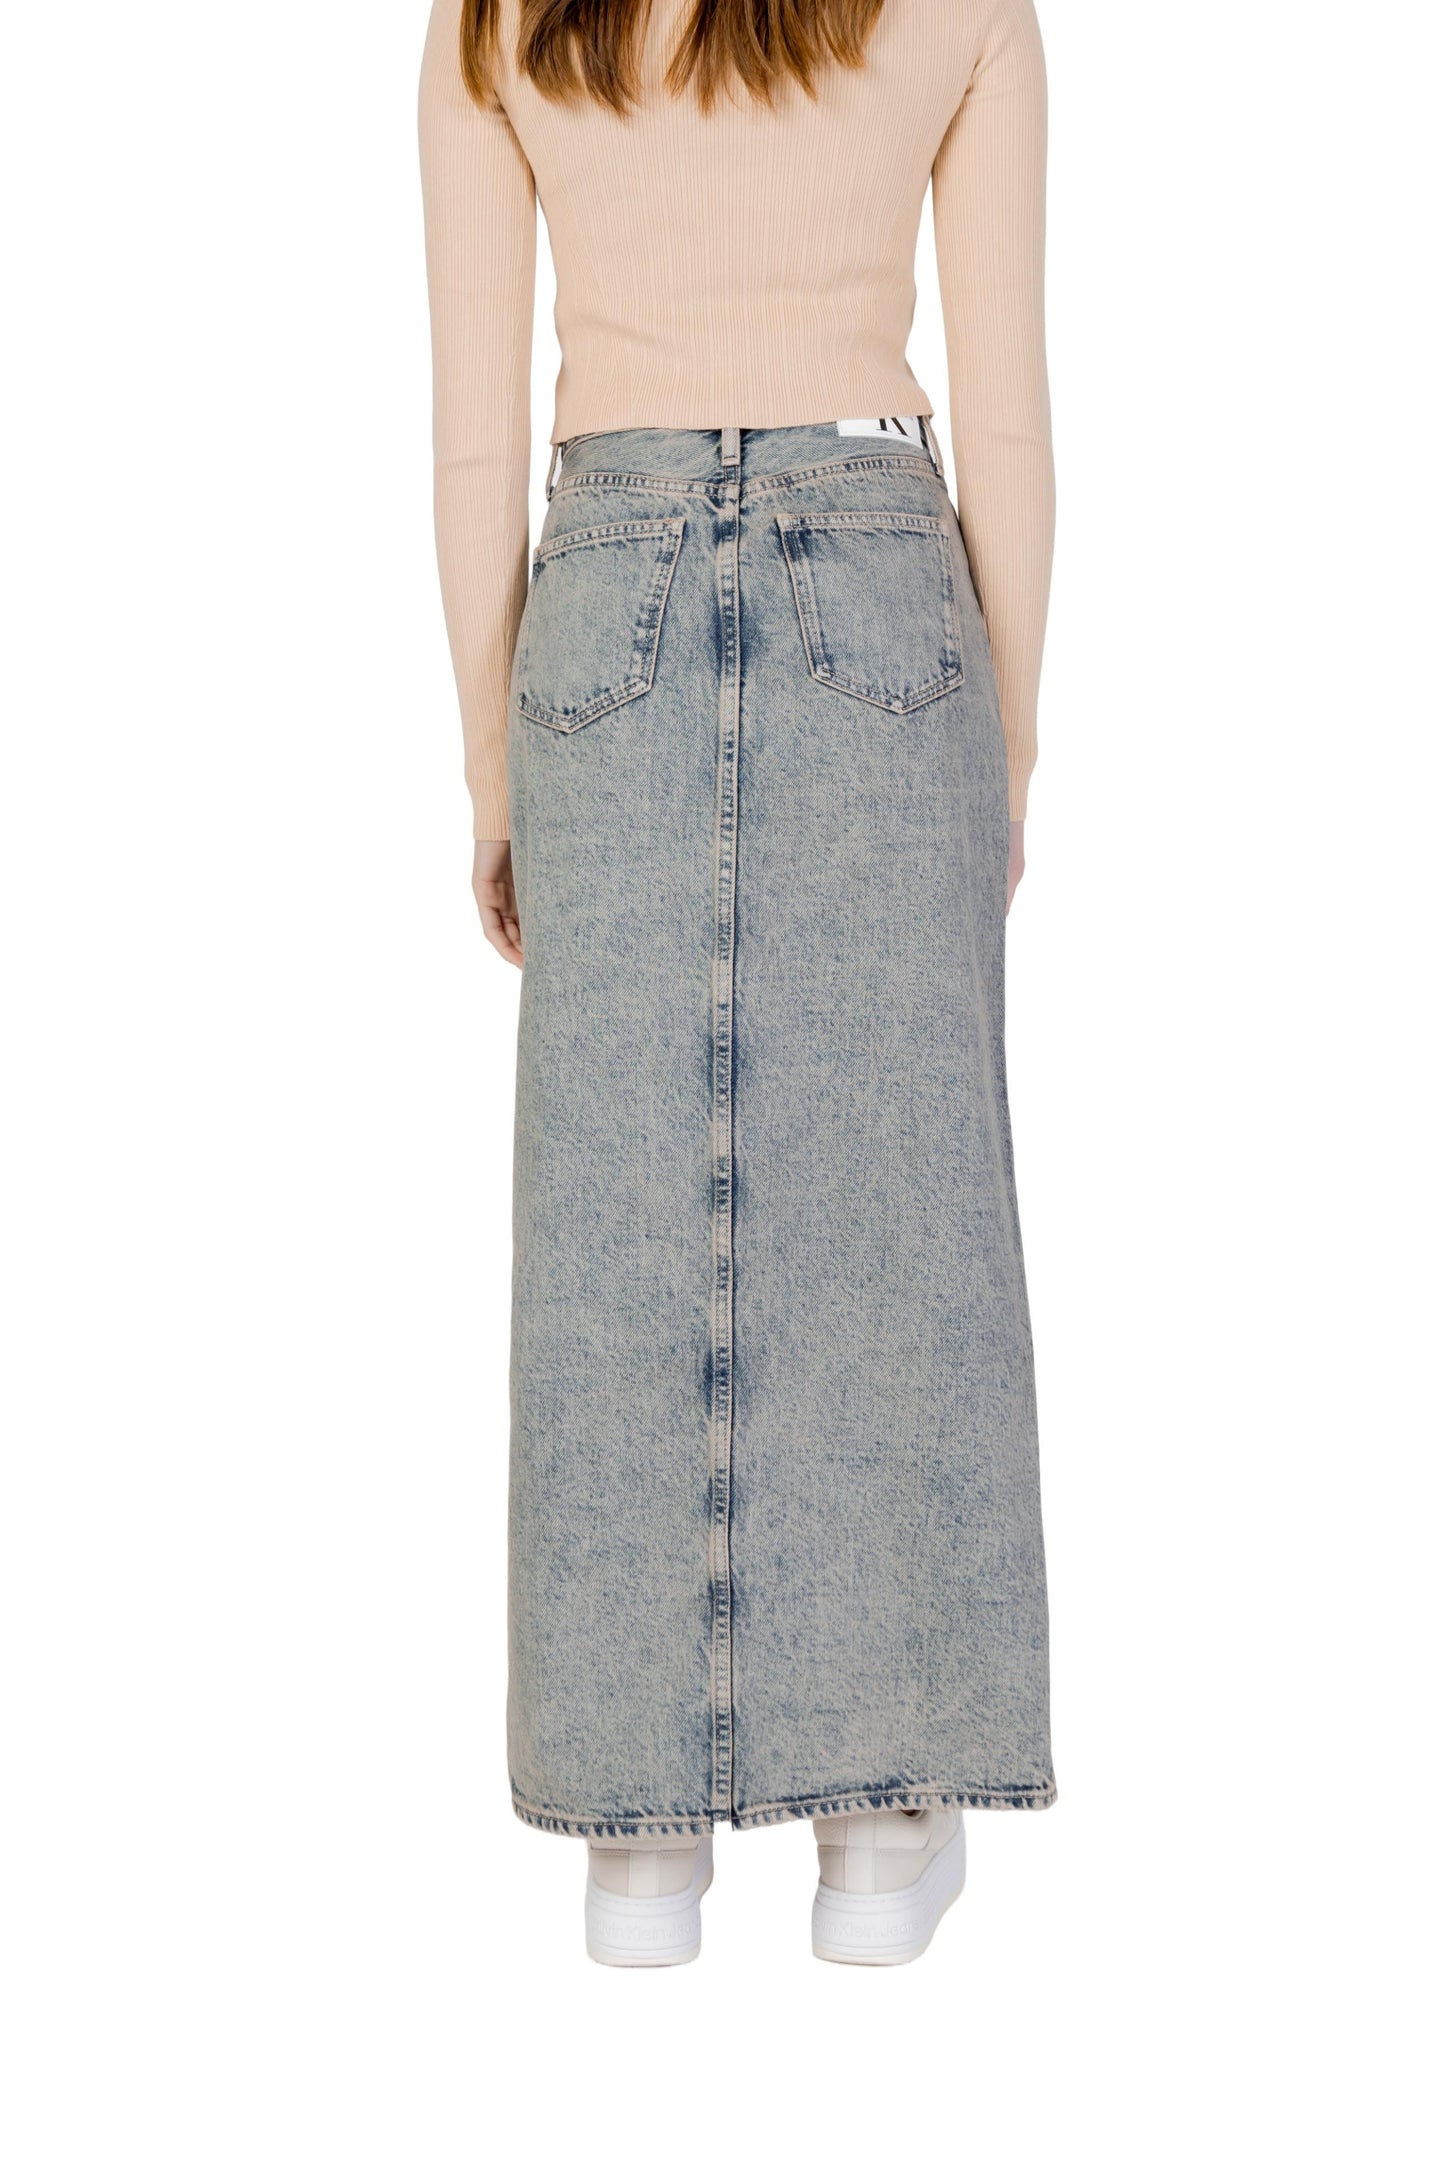 Calvin Klein Jeans Women Skirt